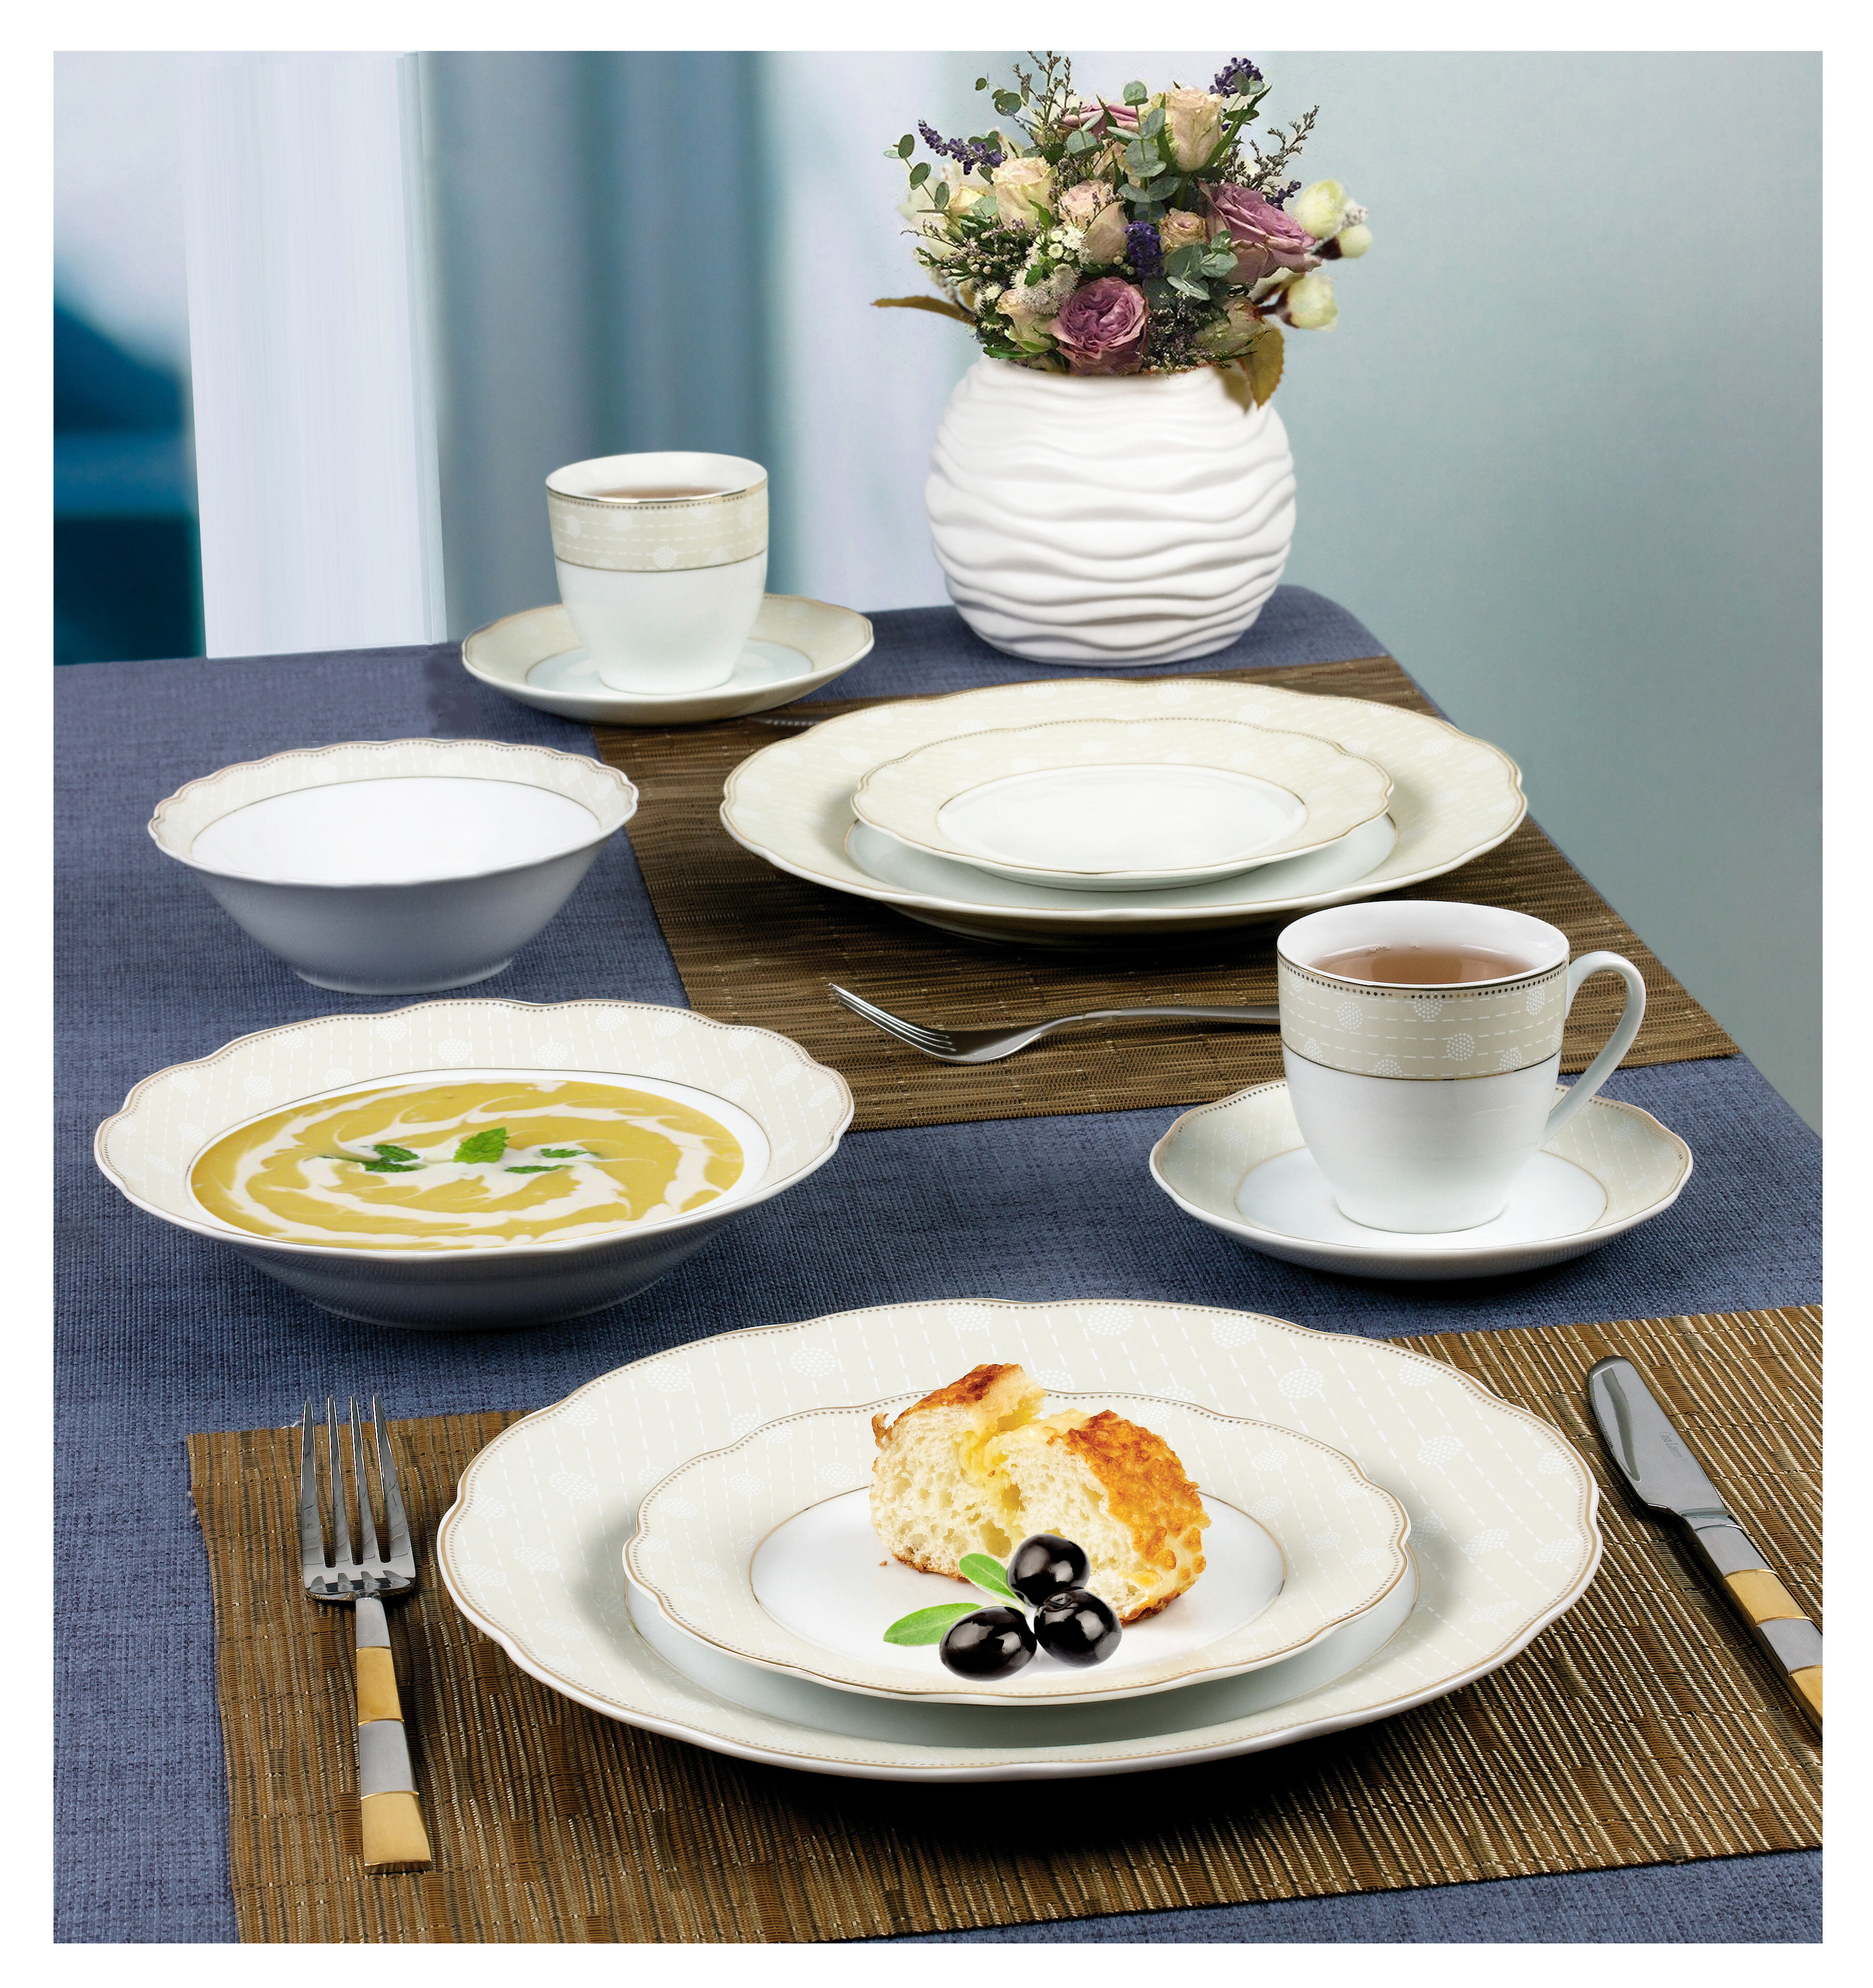 Gold Lorren Home Trends LH434 24 Piece Wavy Porcelain Tova Collection Dinnerware Set 